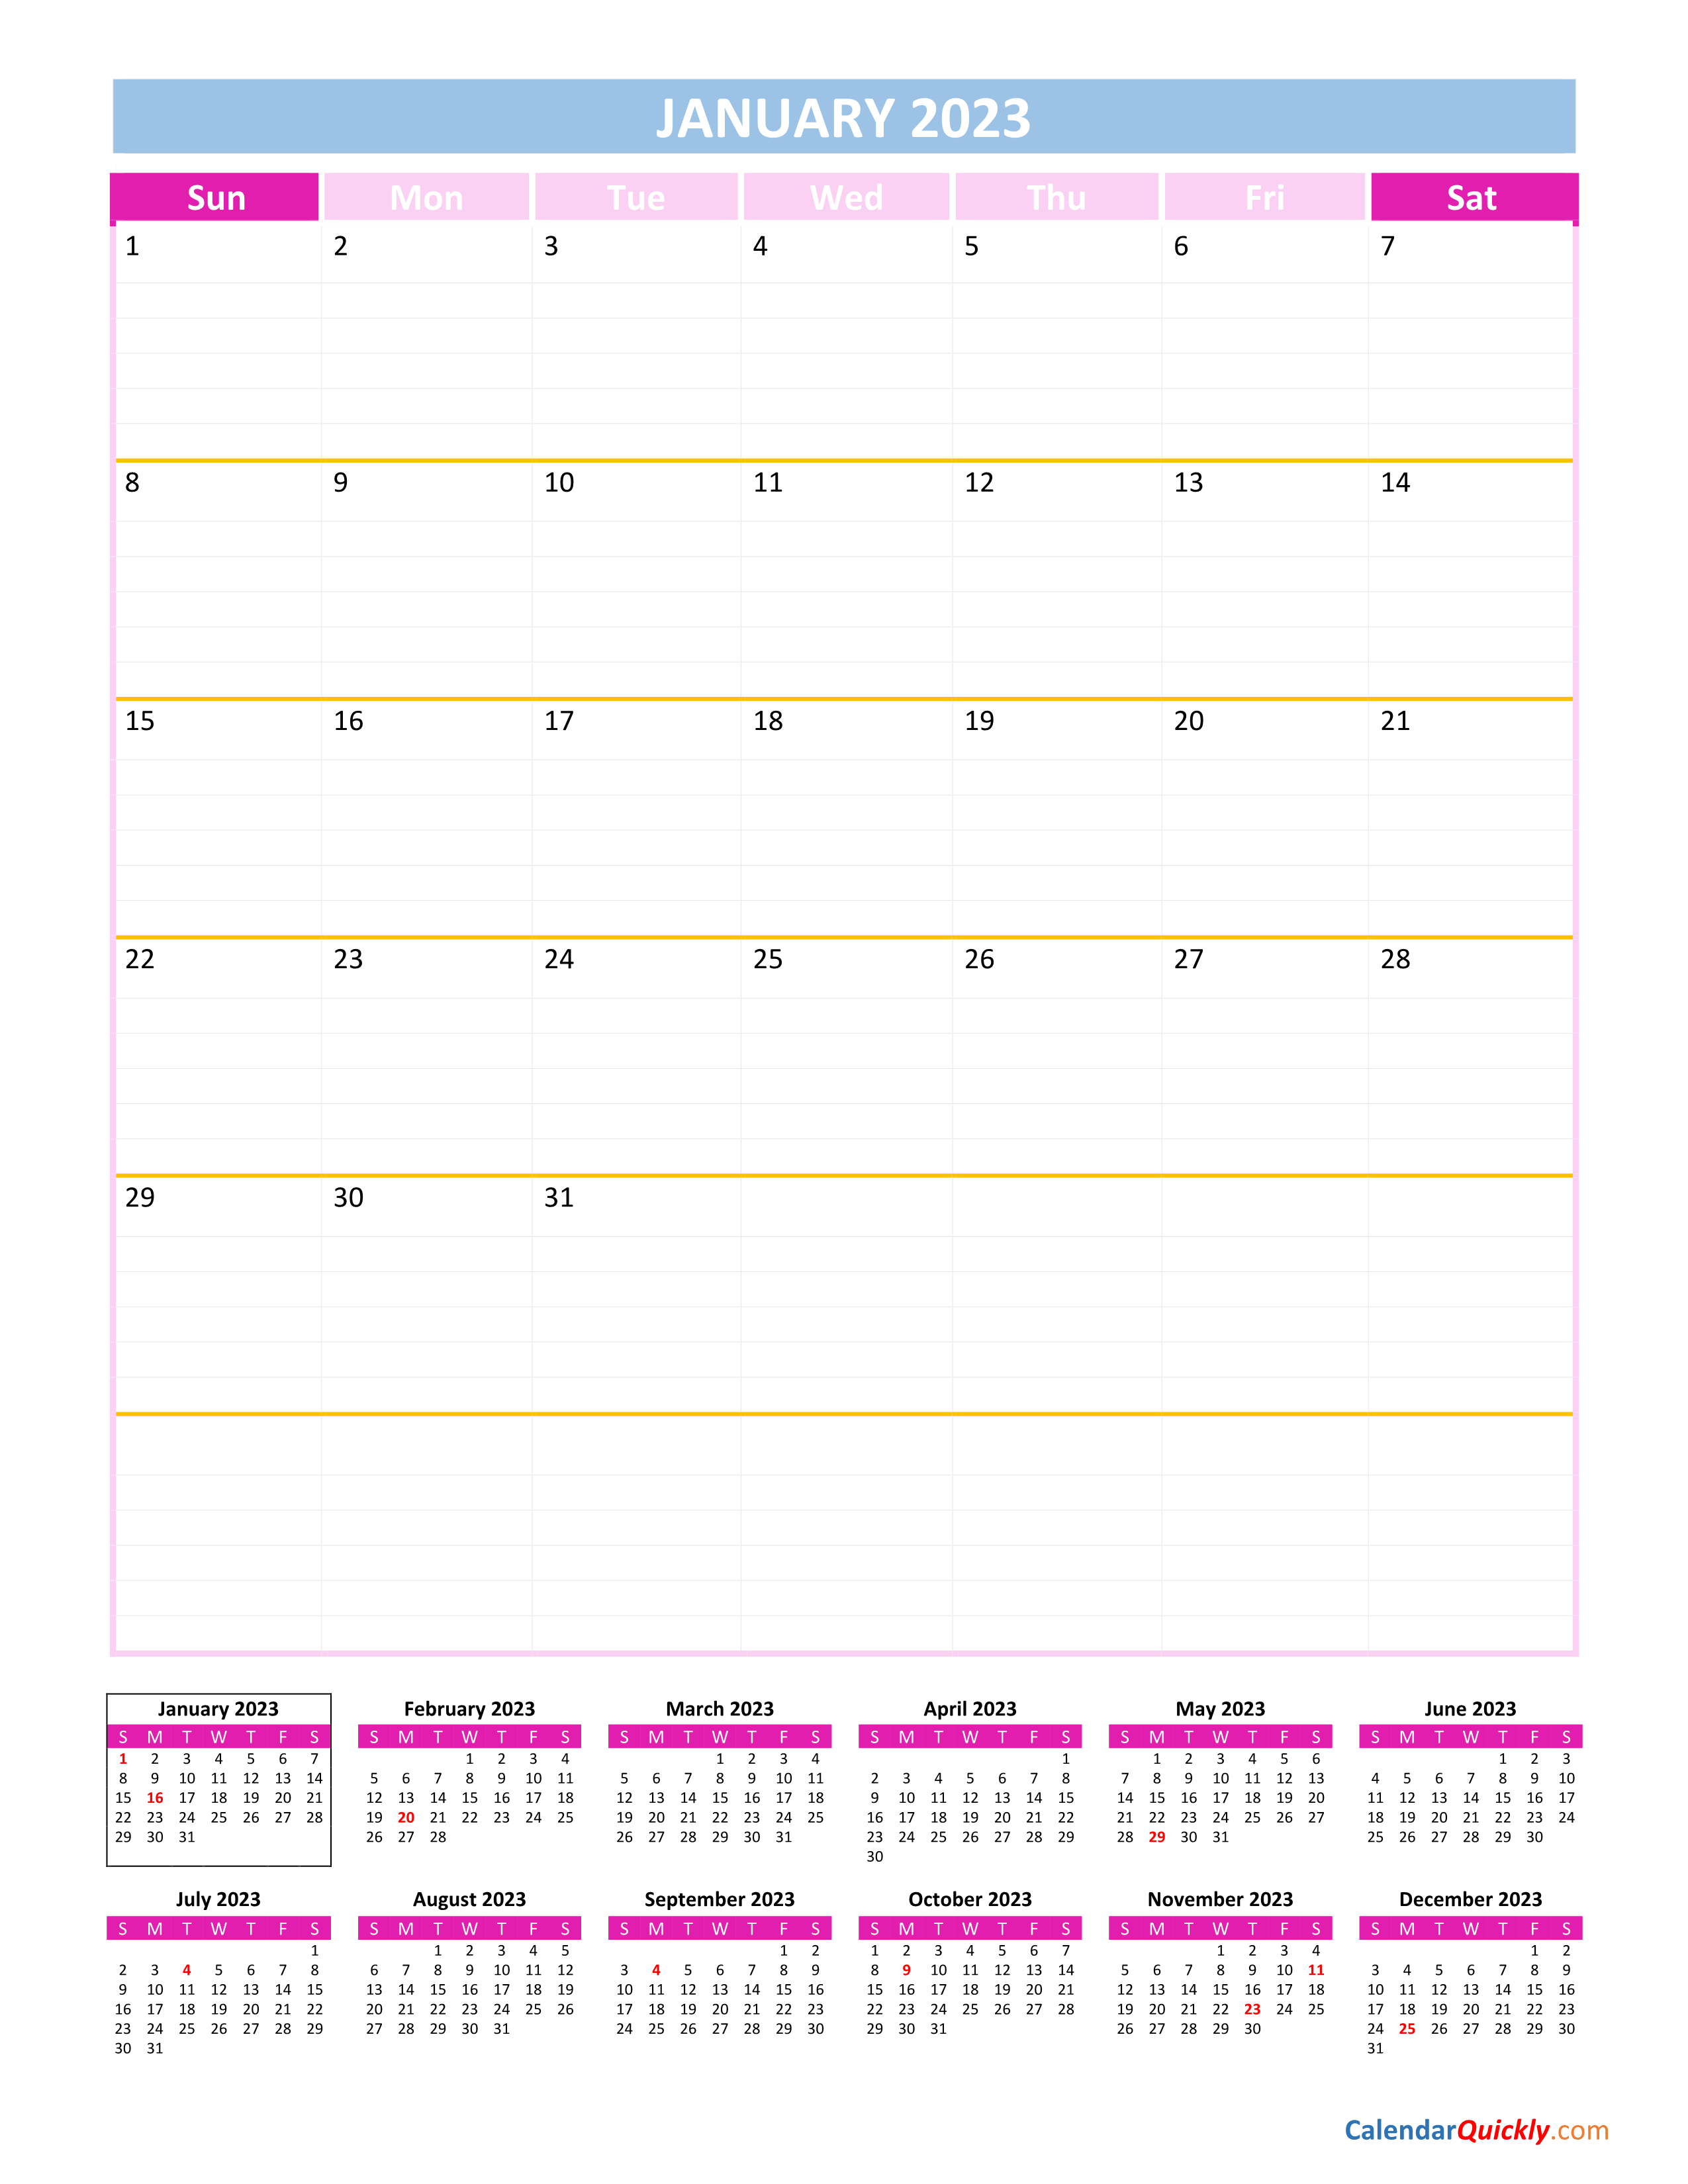 Monthly Calendar 2023 Vertical Calendar Quickly